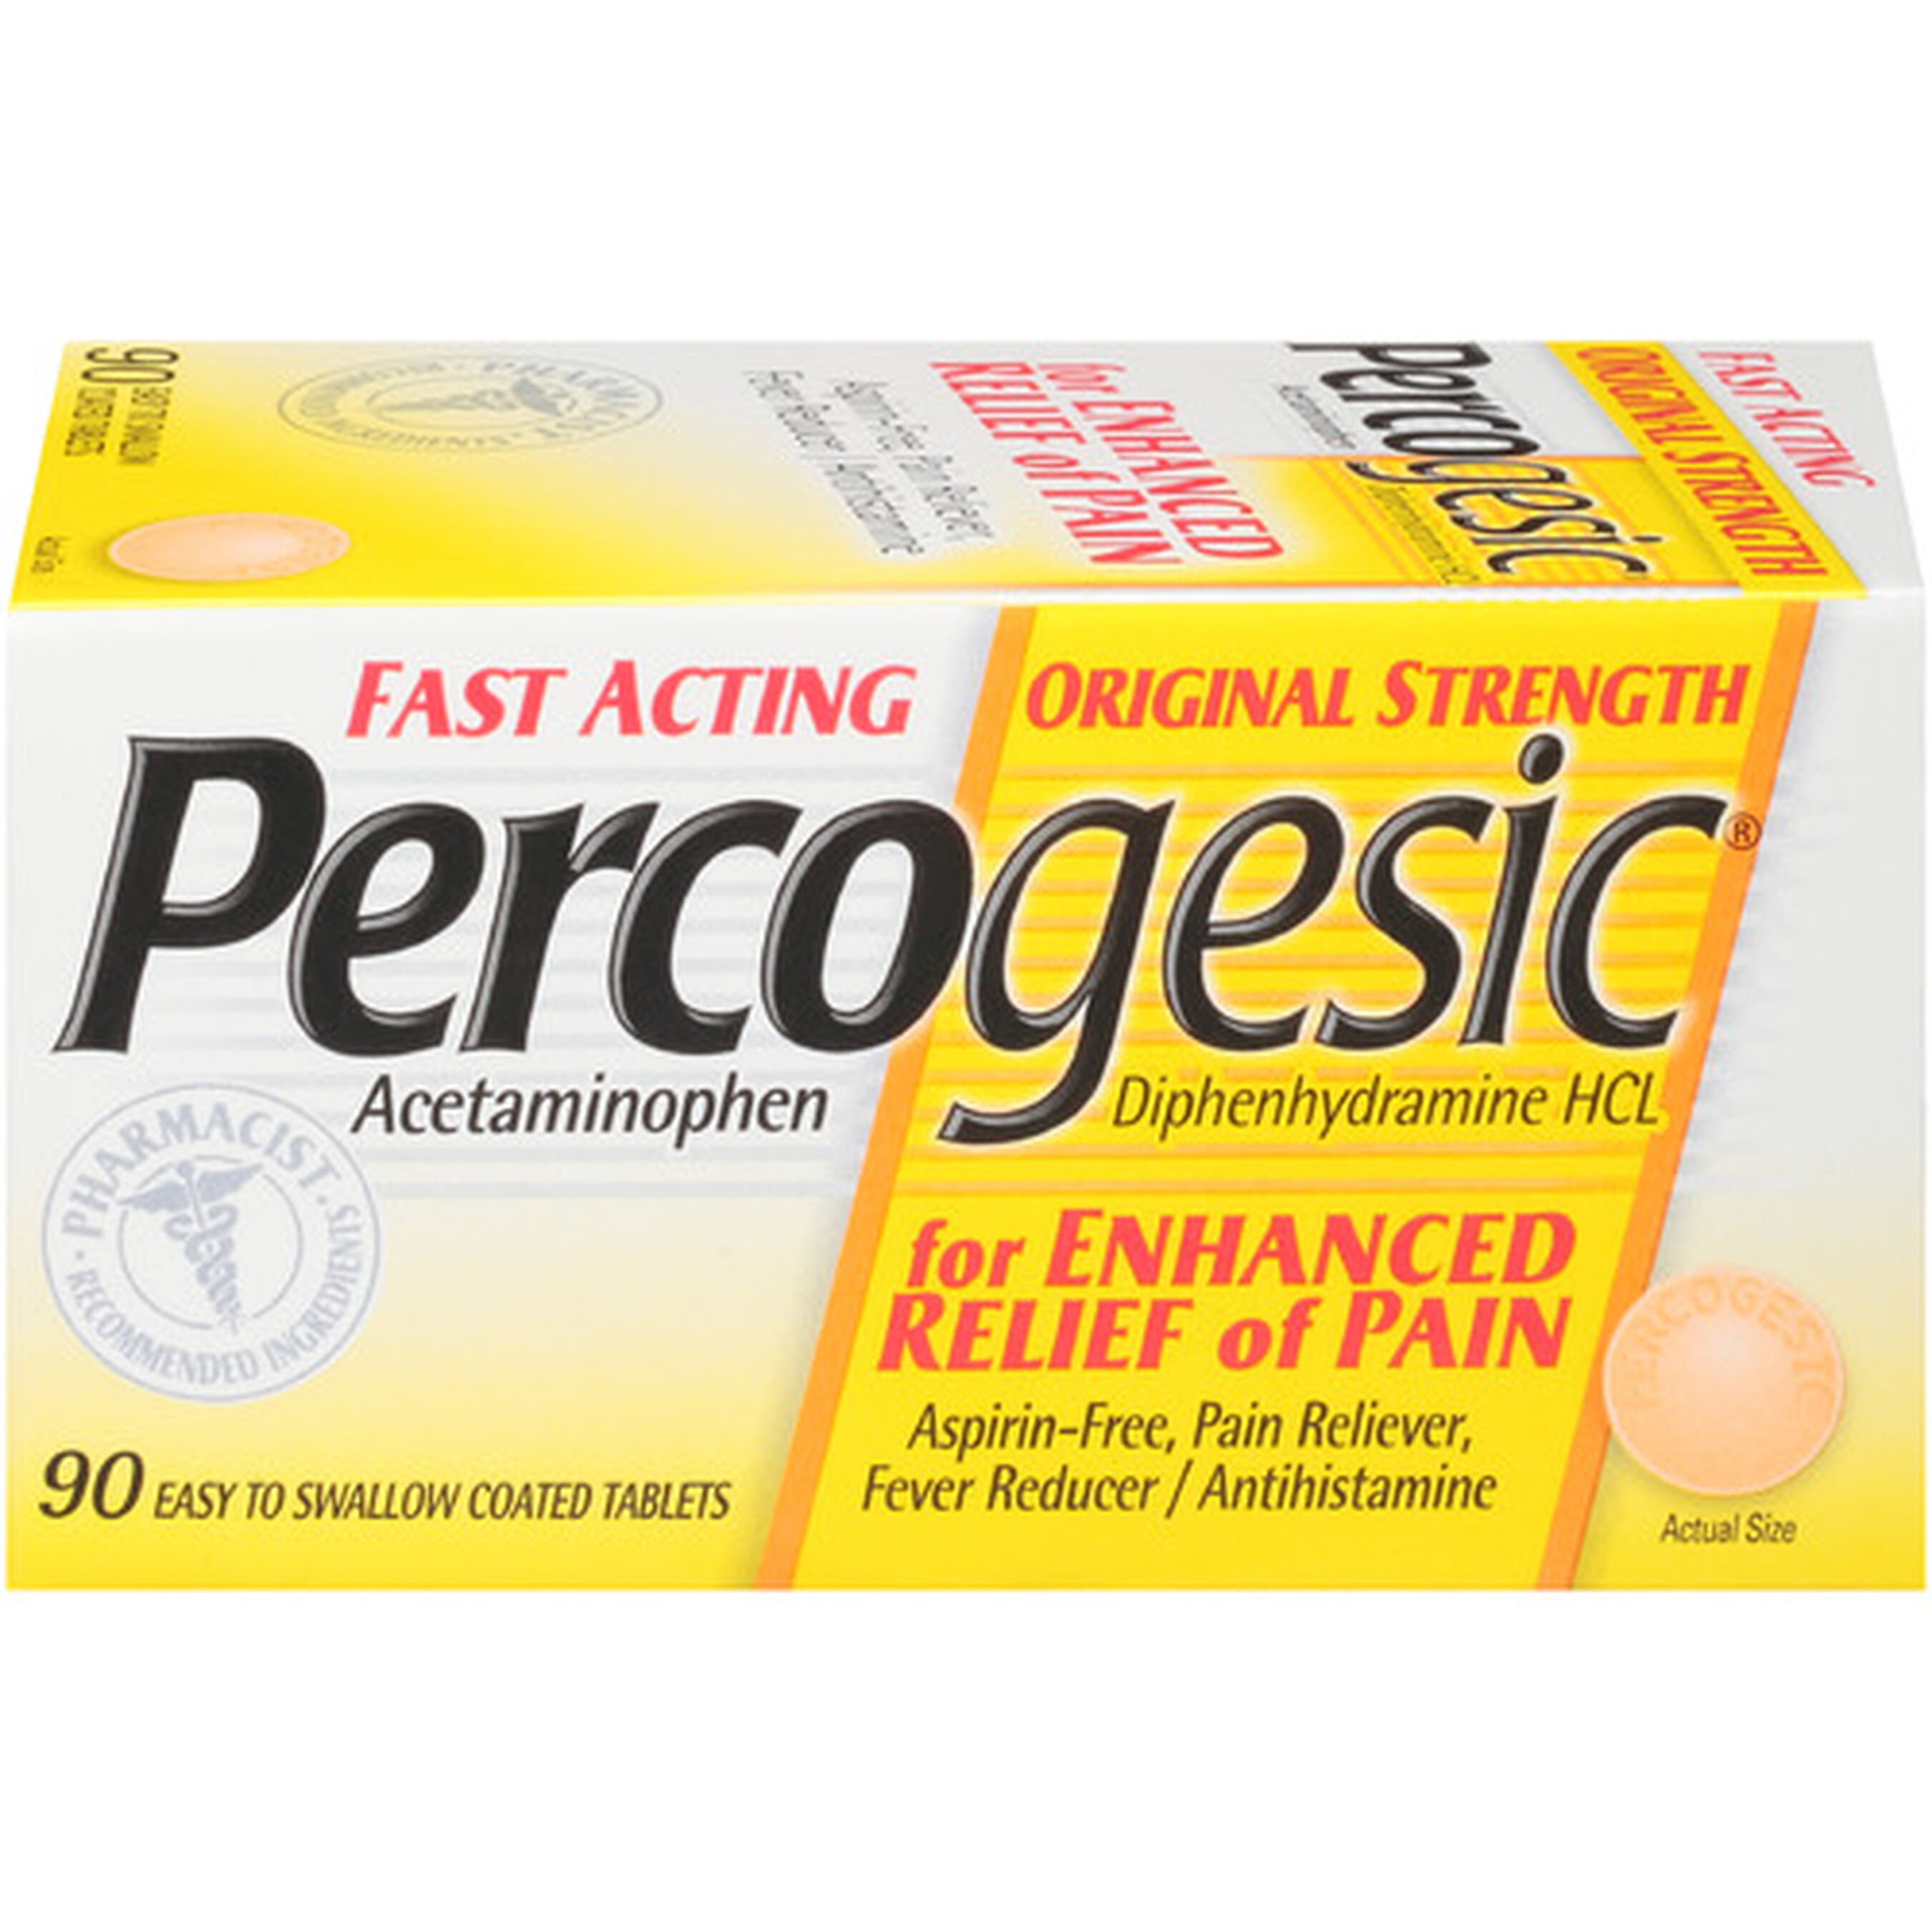 percogesic extra strength